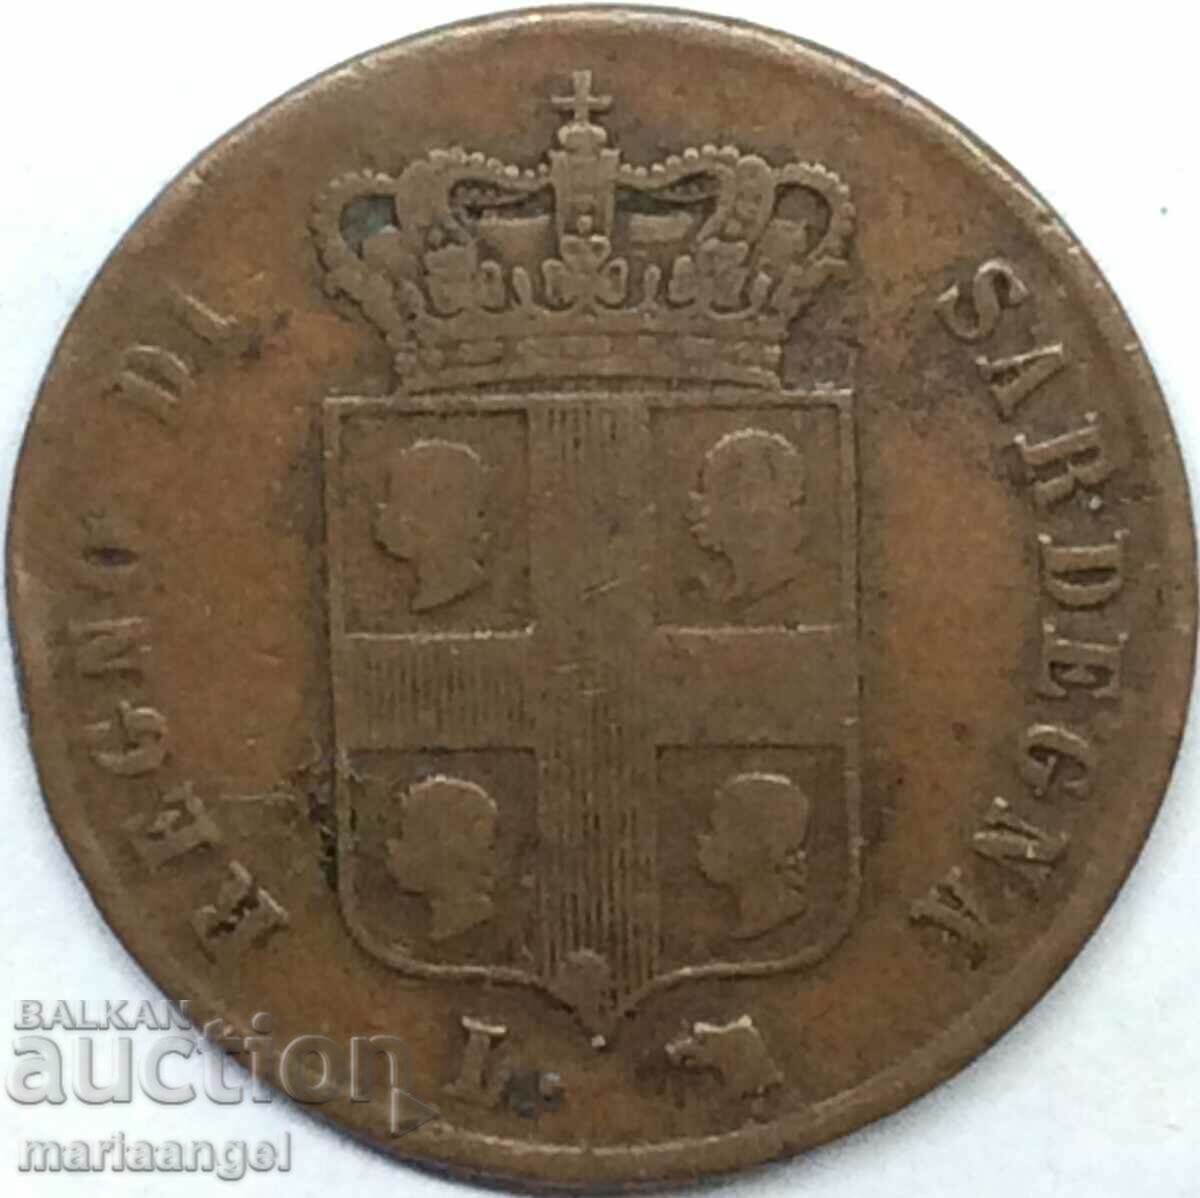 3 centesimi 1842 Italy Sardinia - quite rare